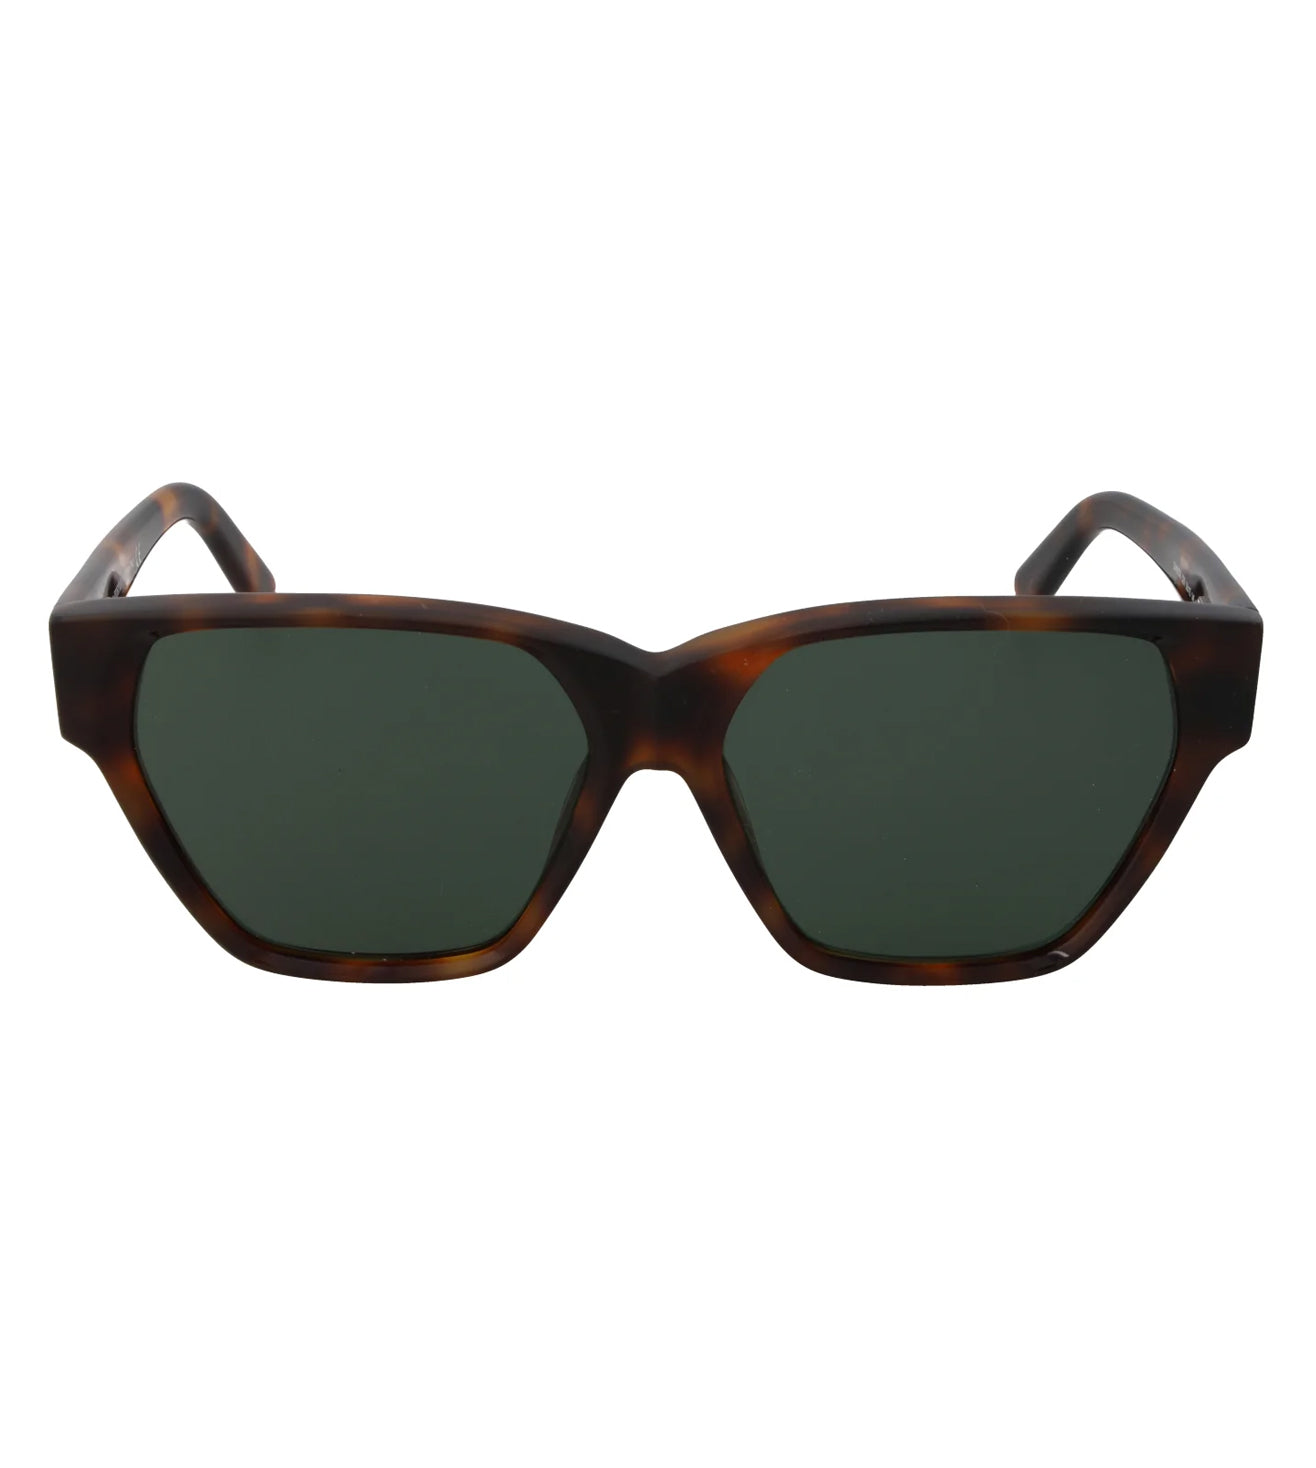 Max Mara Women's Green Beveled Sunglasses